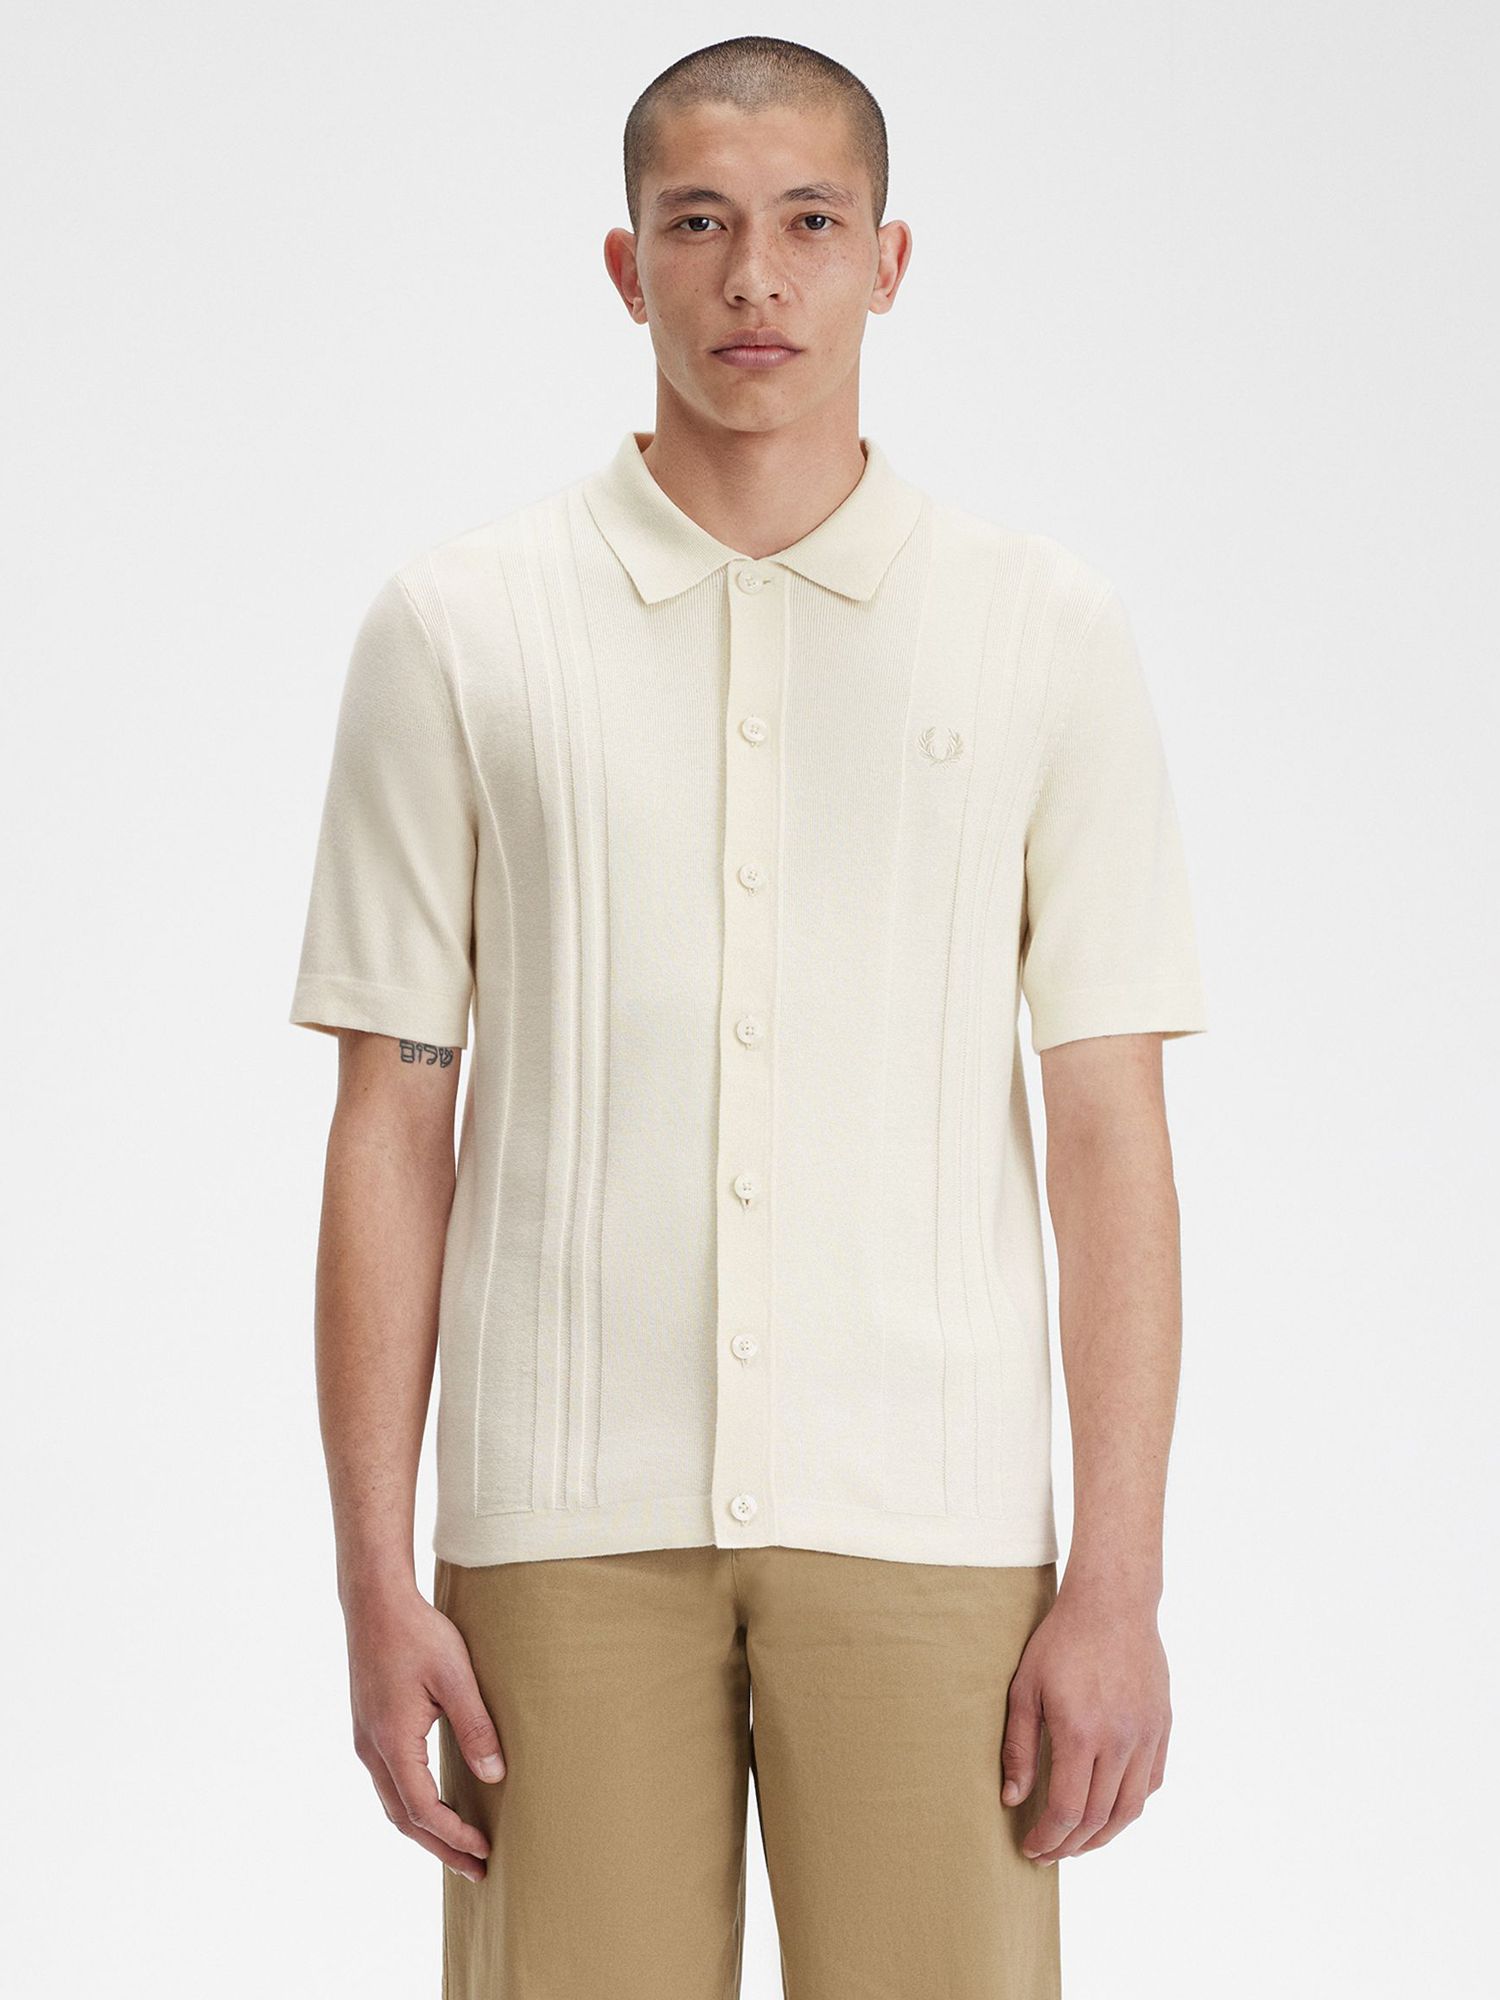 Fred Perry Button Knit Shirt, Ecru, M